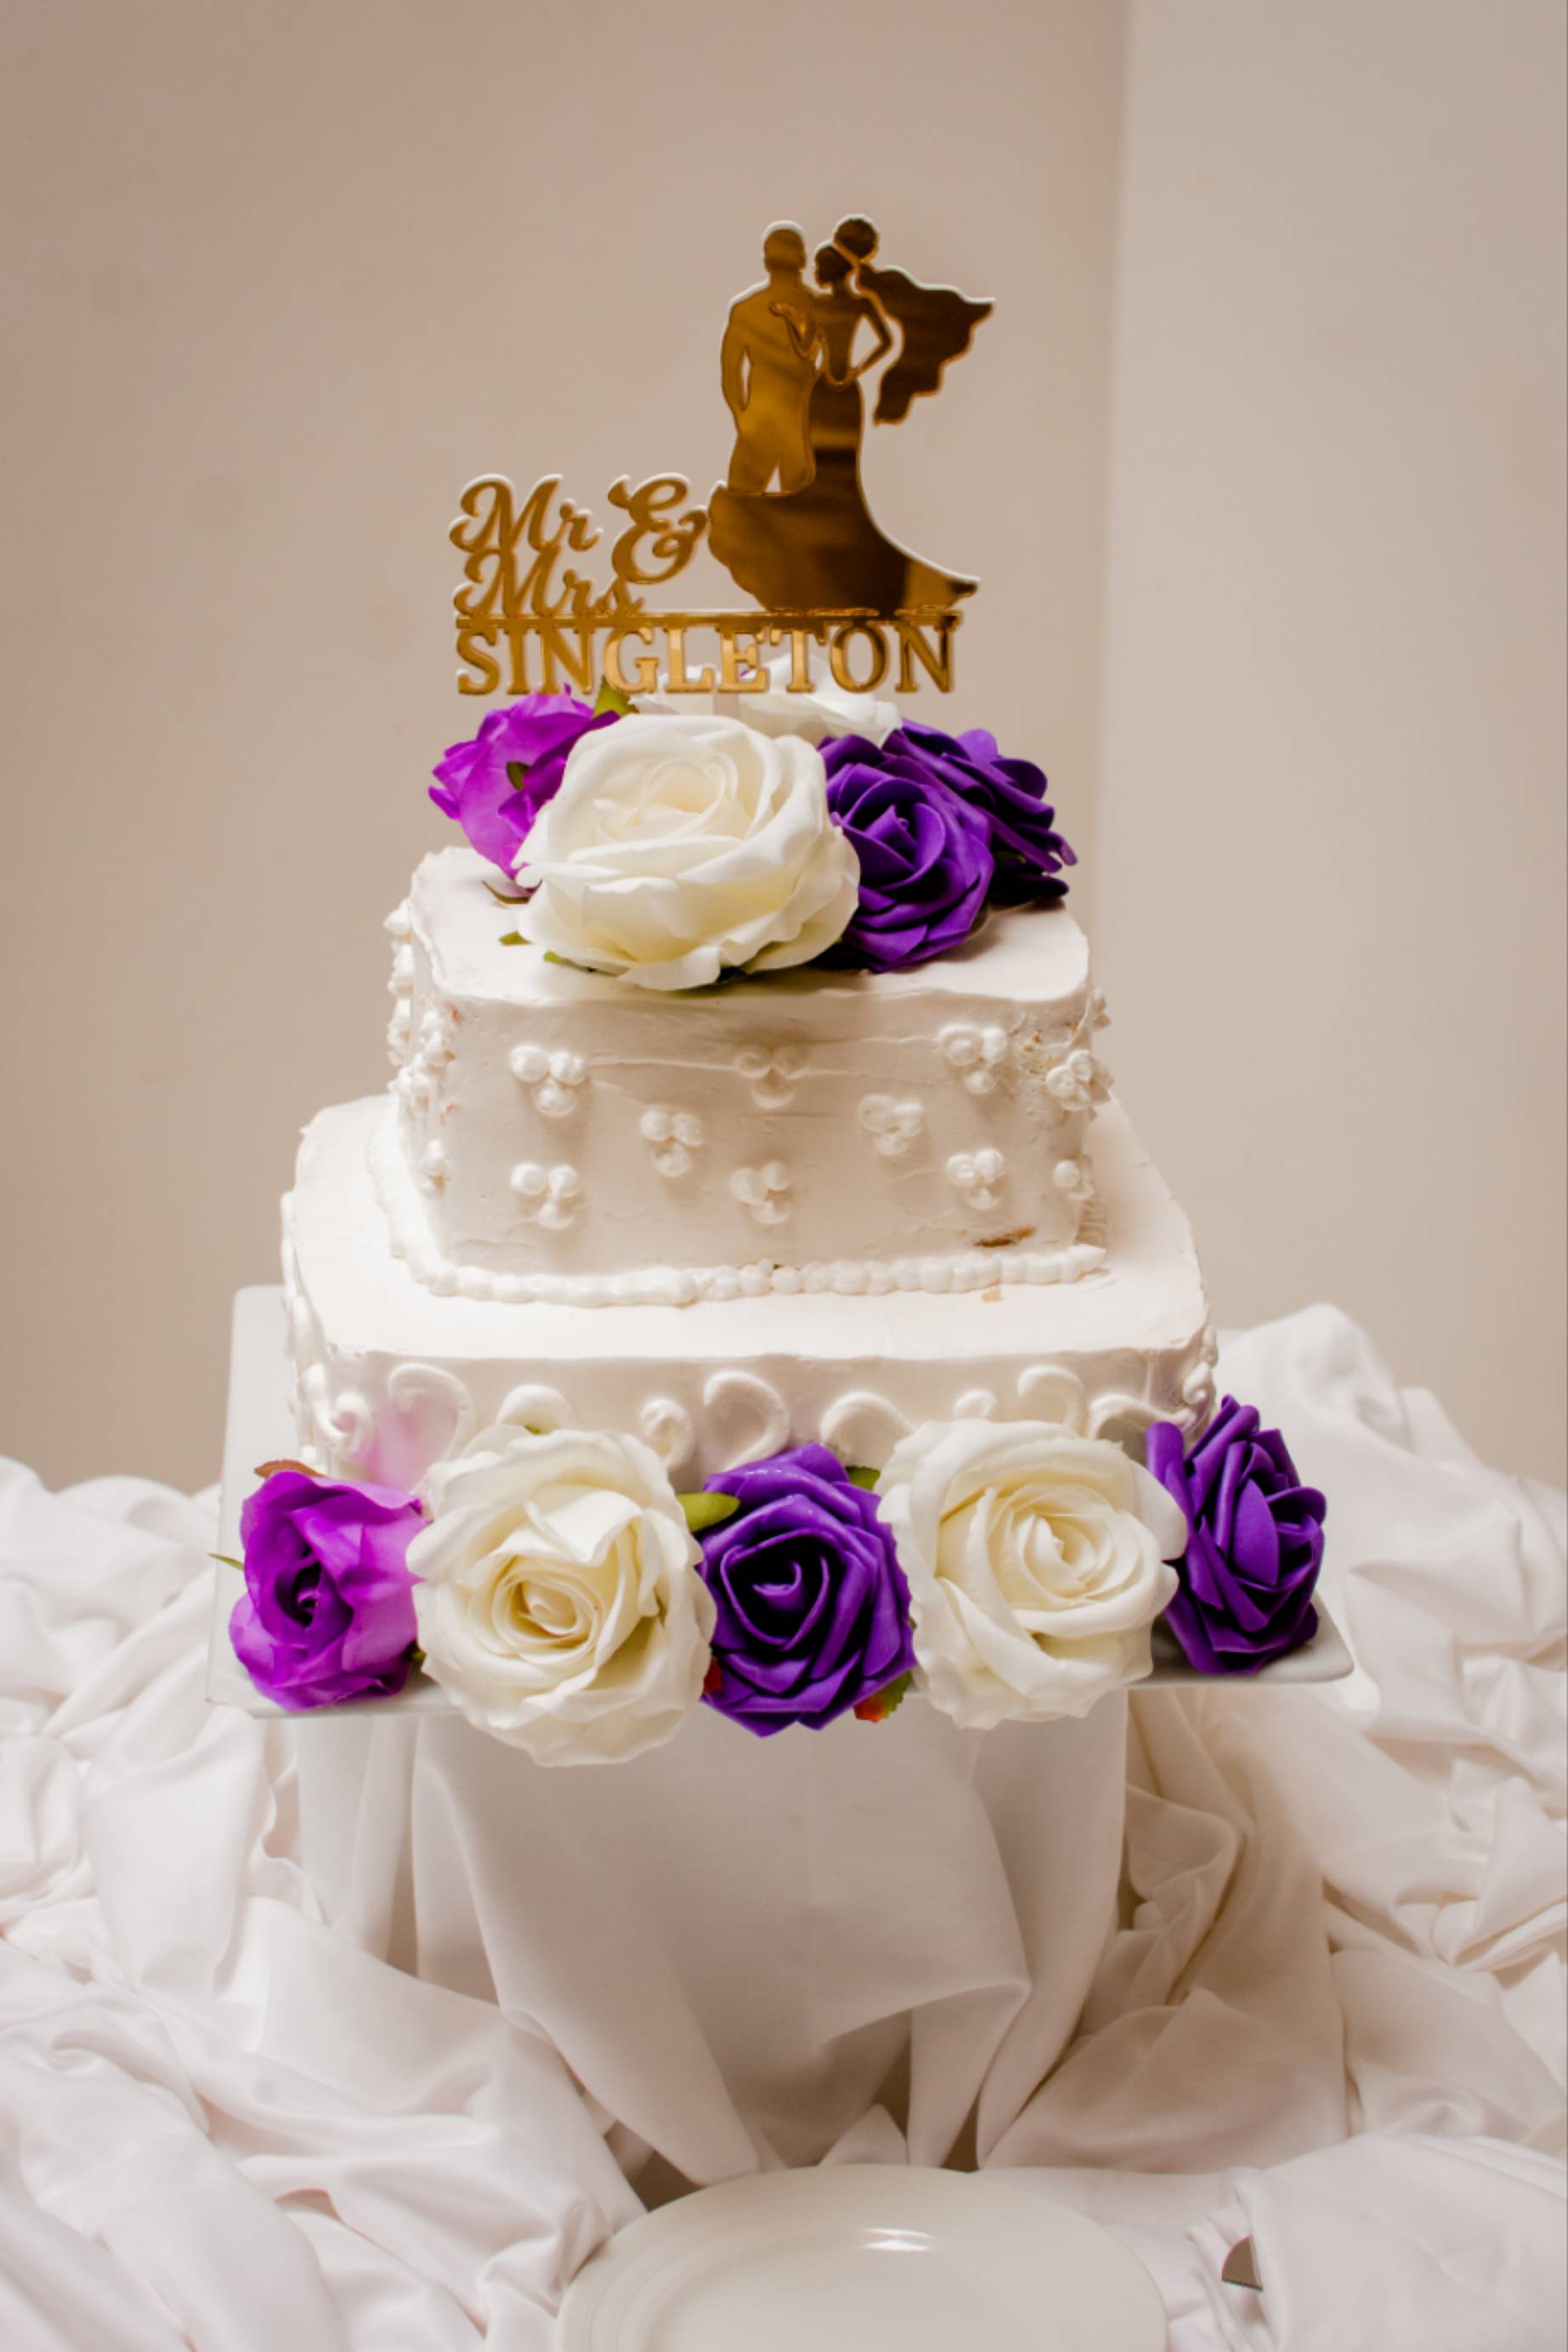 Gold silhouette wedding cake topper